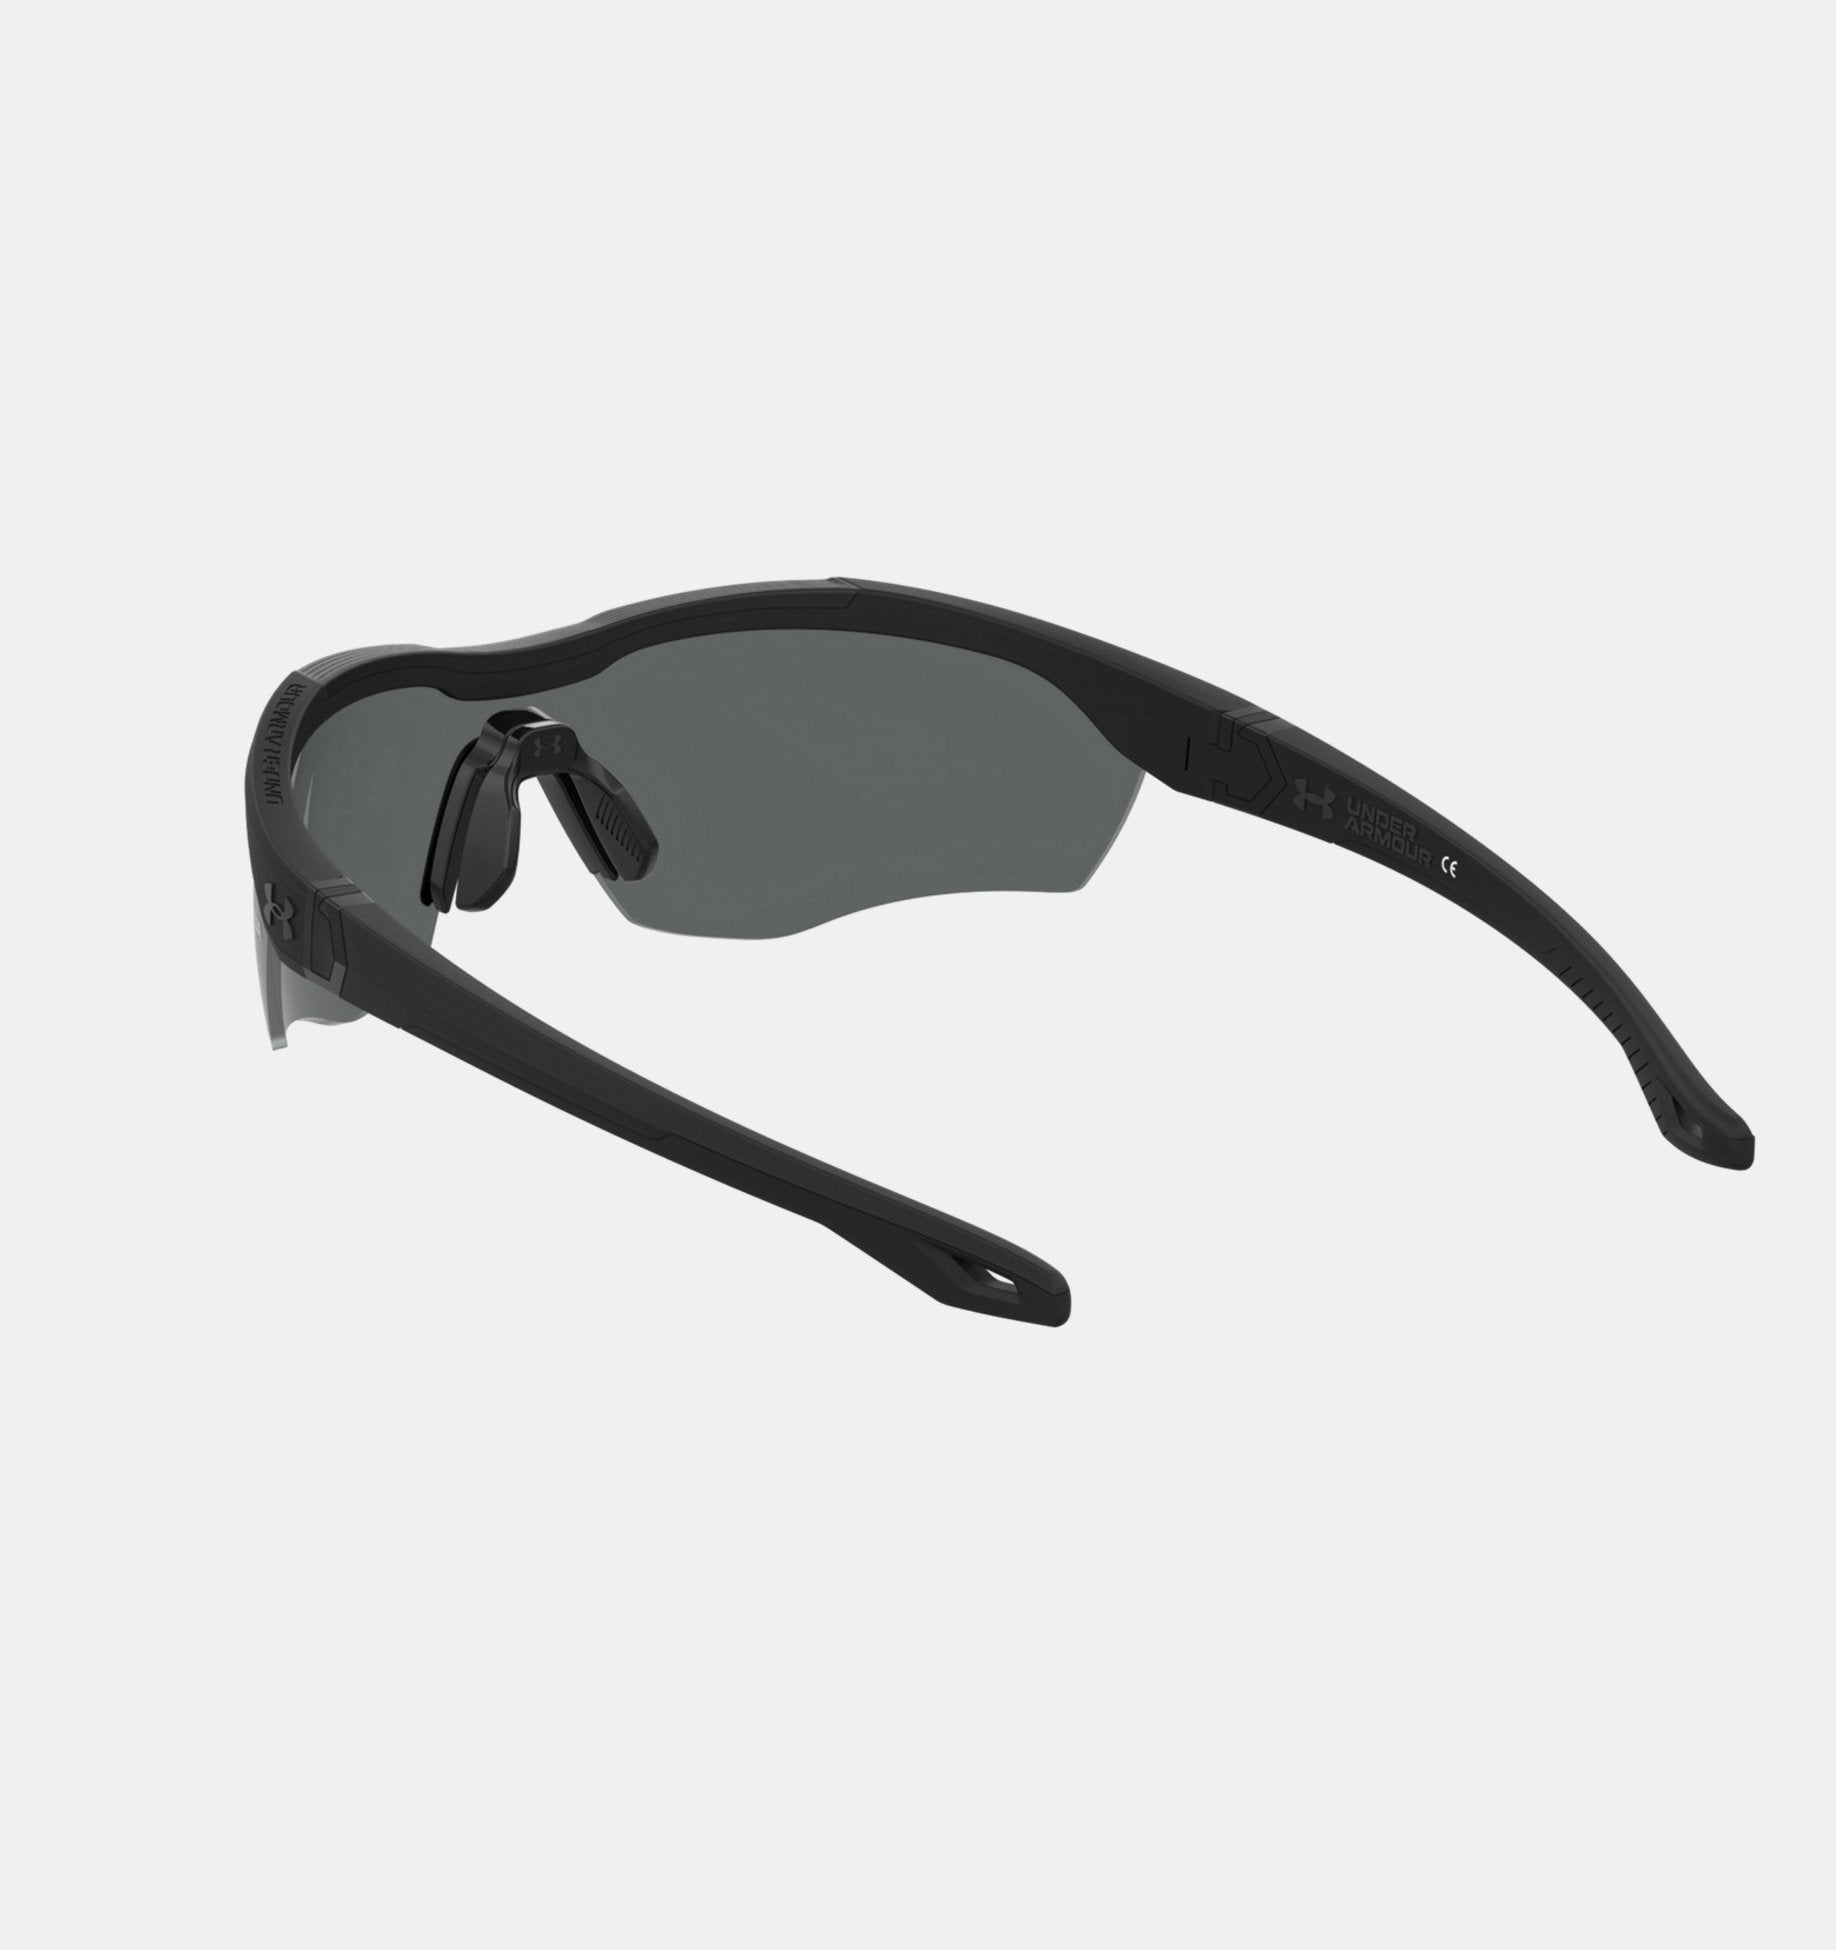 Under Armour Blitzing UA 0012/S 003/M9 Sunglasses Black/Polarized Gray 70mm  | EyeSpecs.com